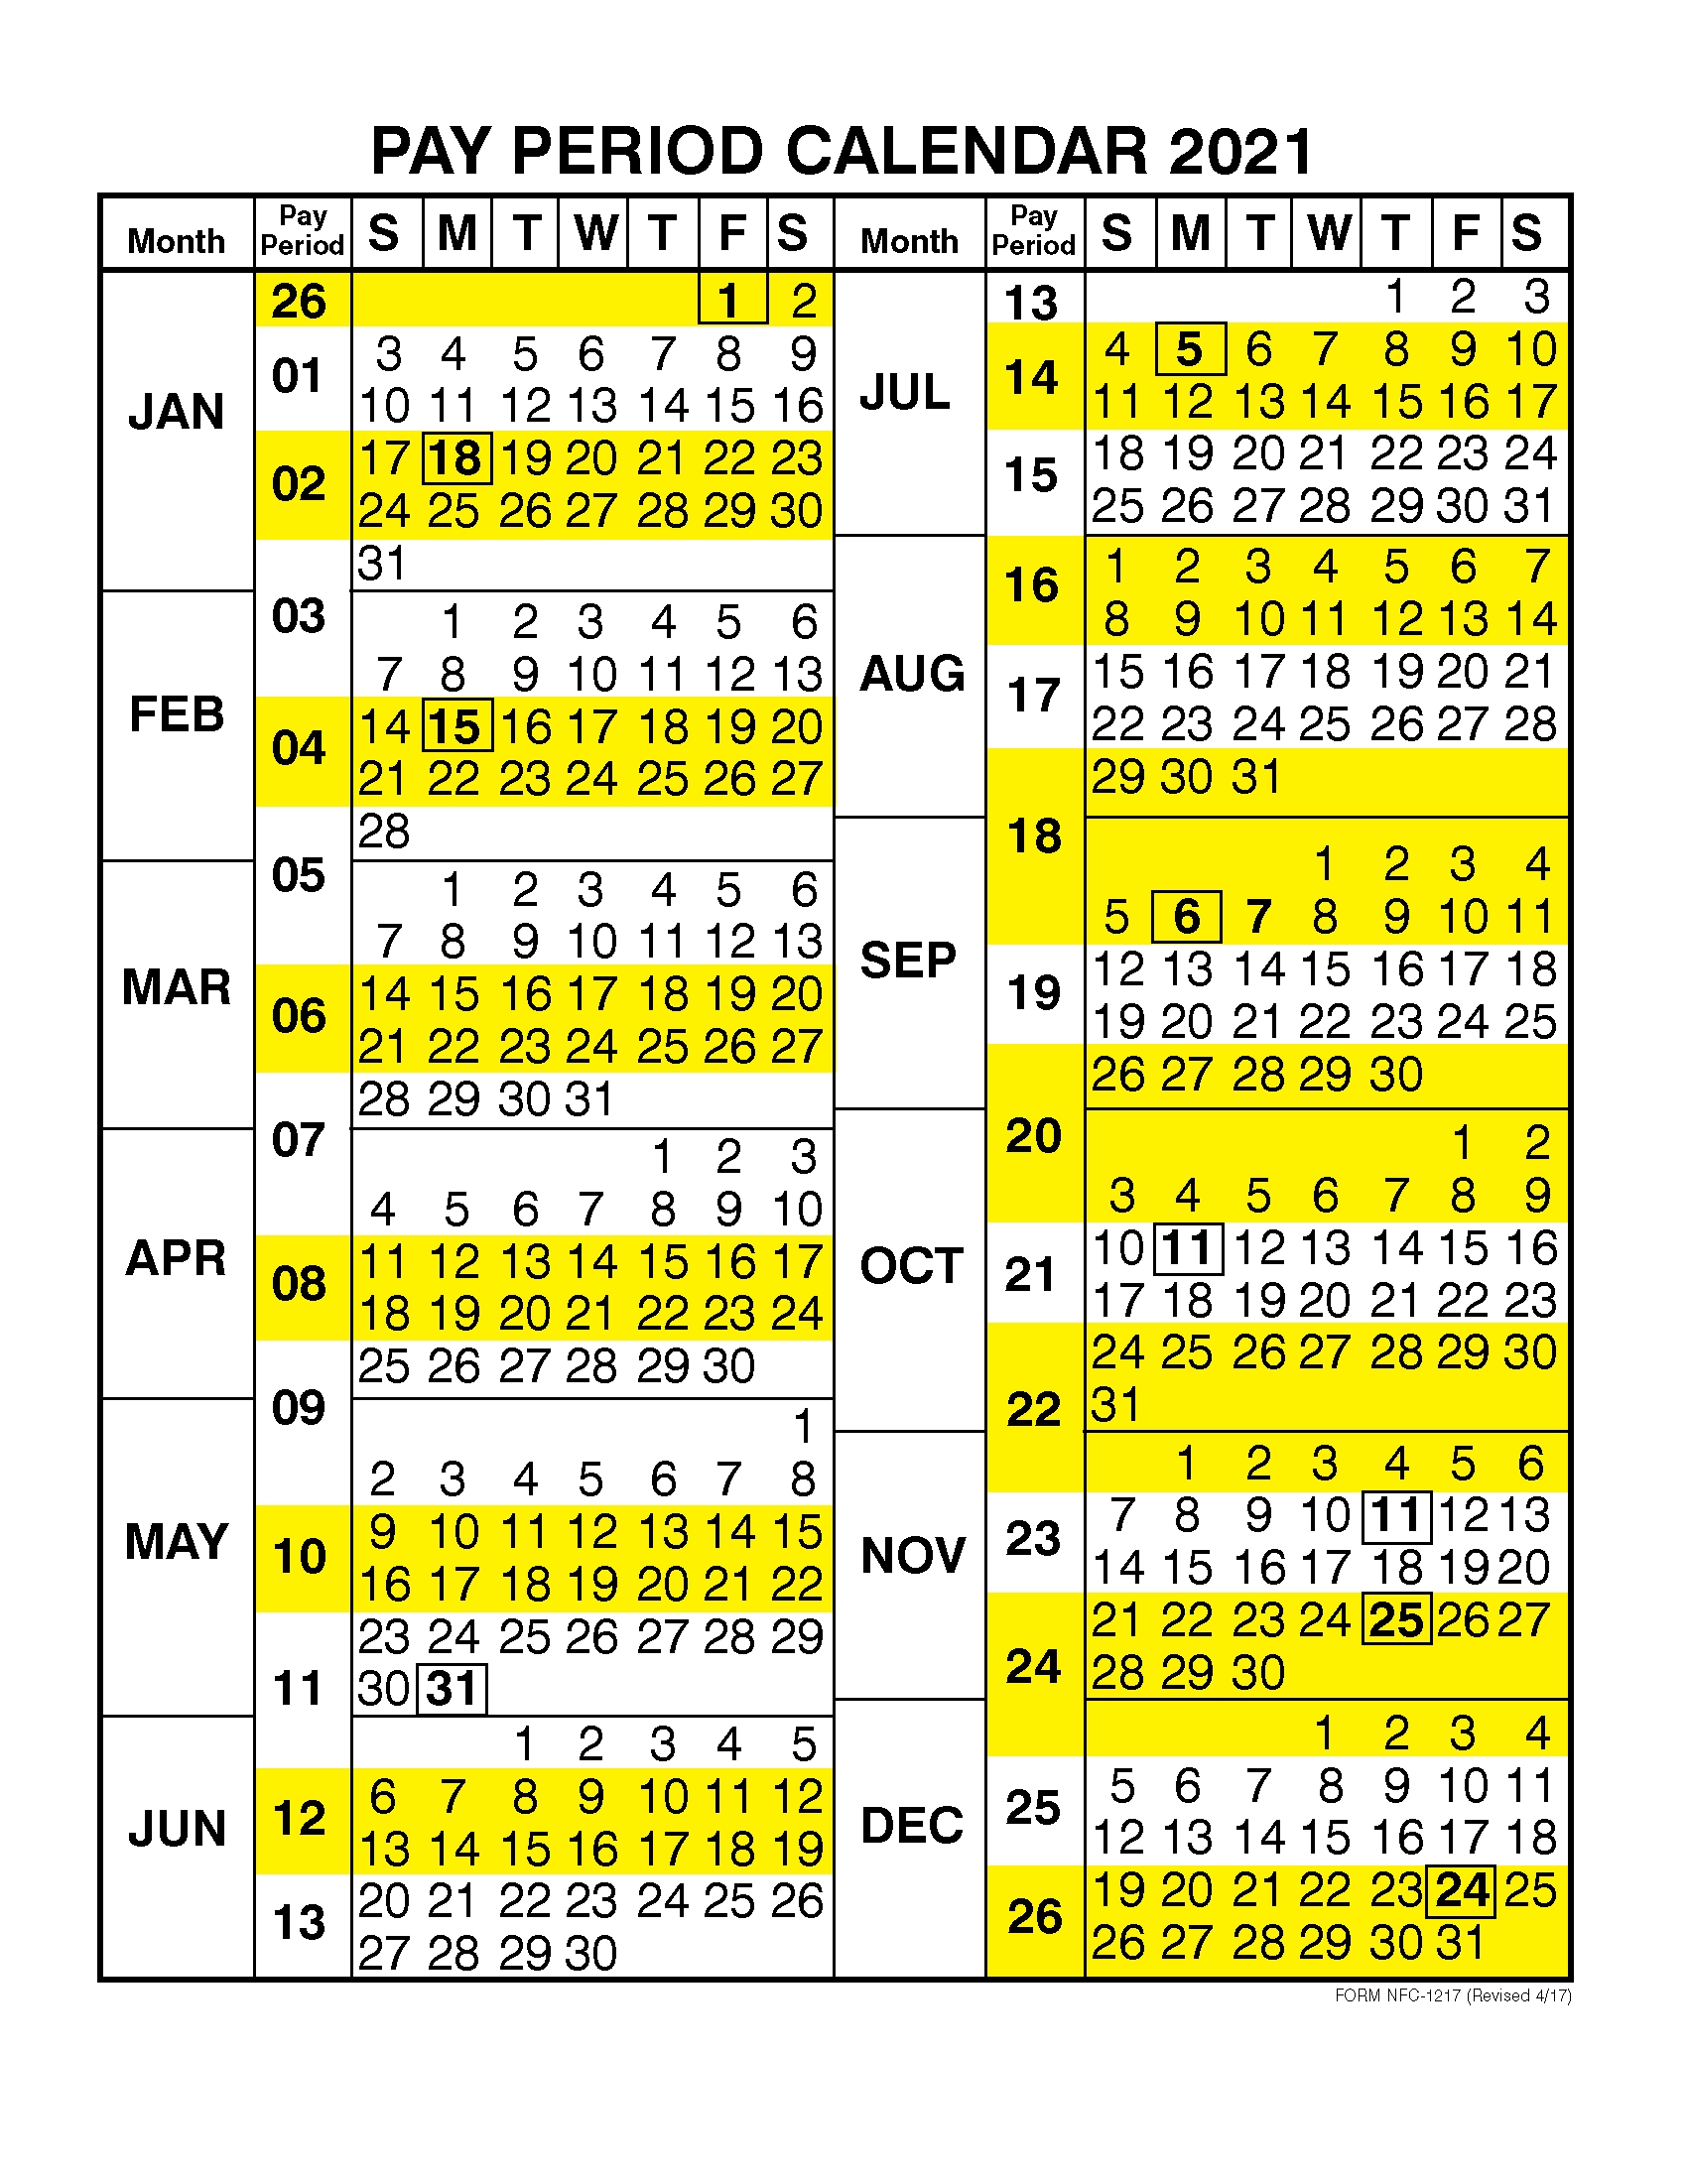 collect-2021-payroll-calendar-federal-government-best-calendar-example